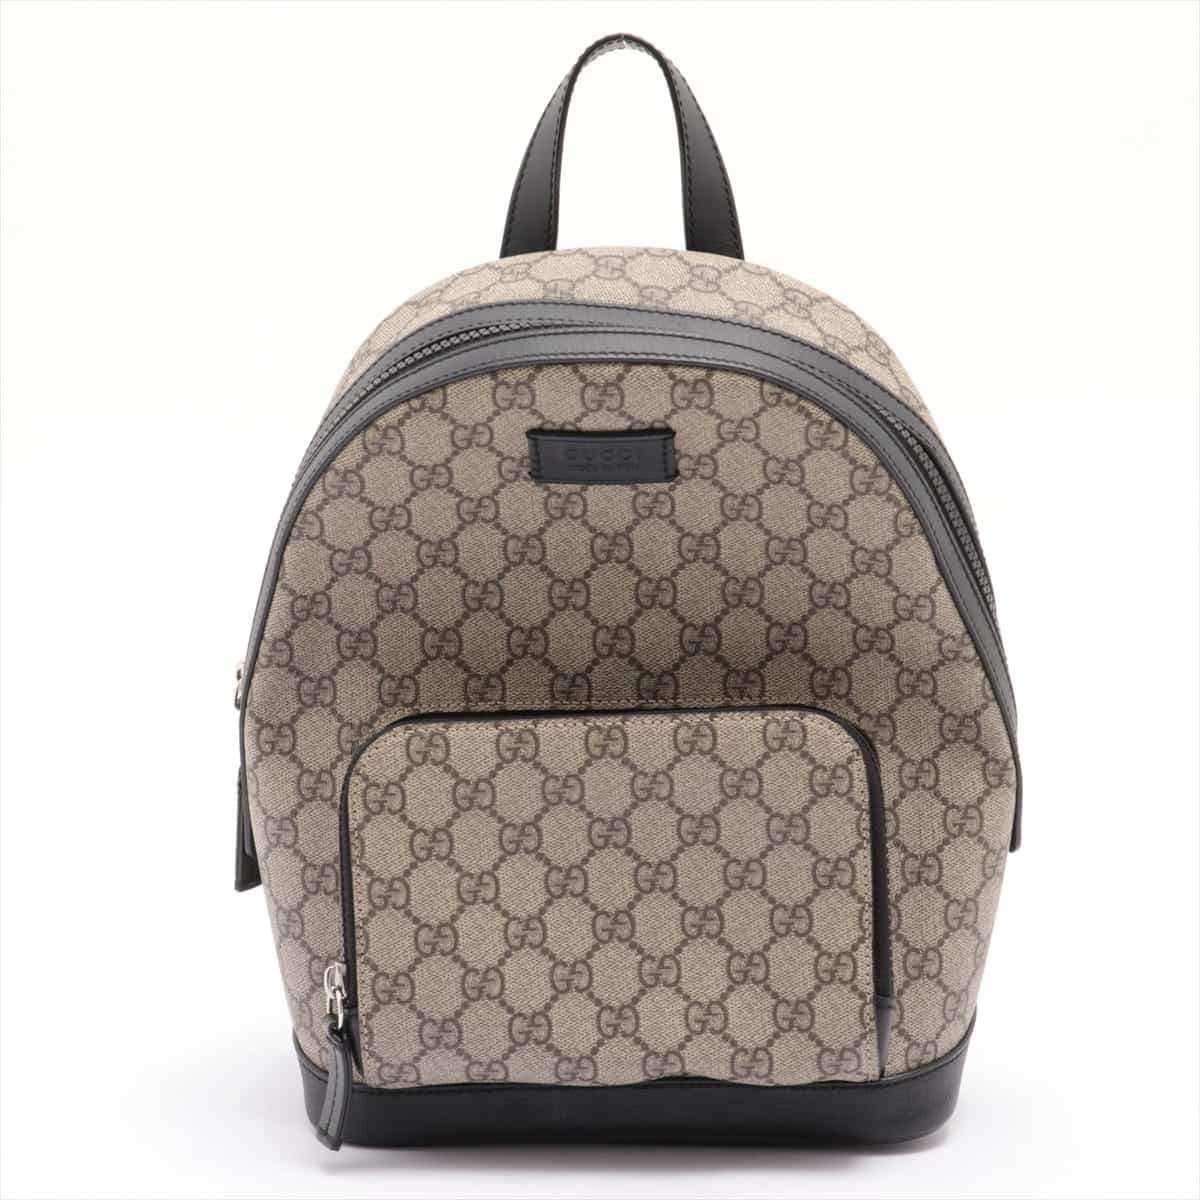 Gucci GG Supreme Backpack Black 429020